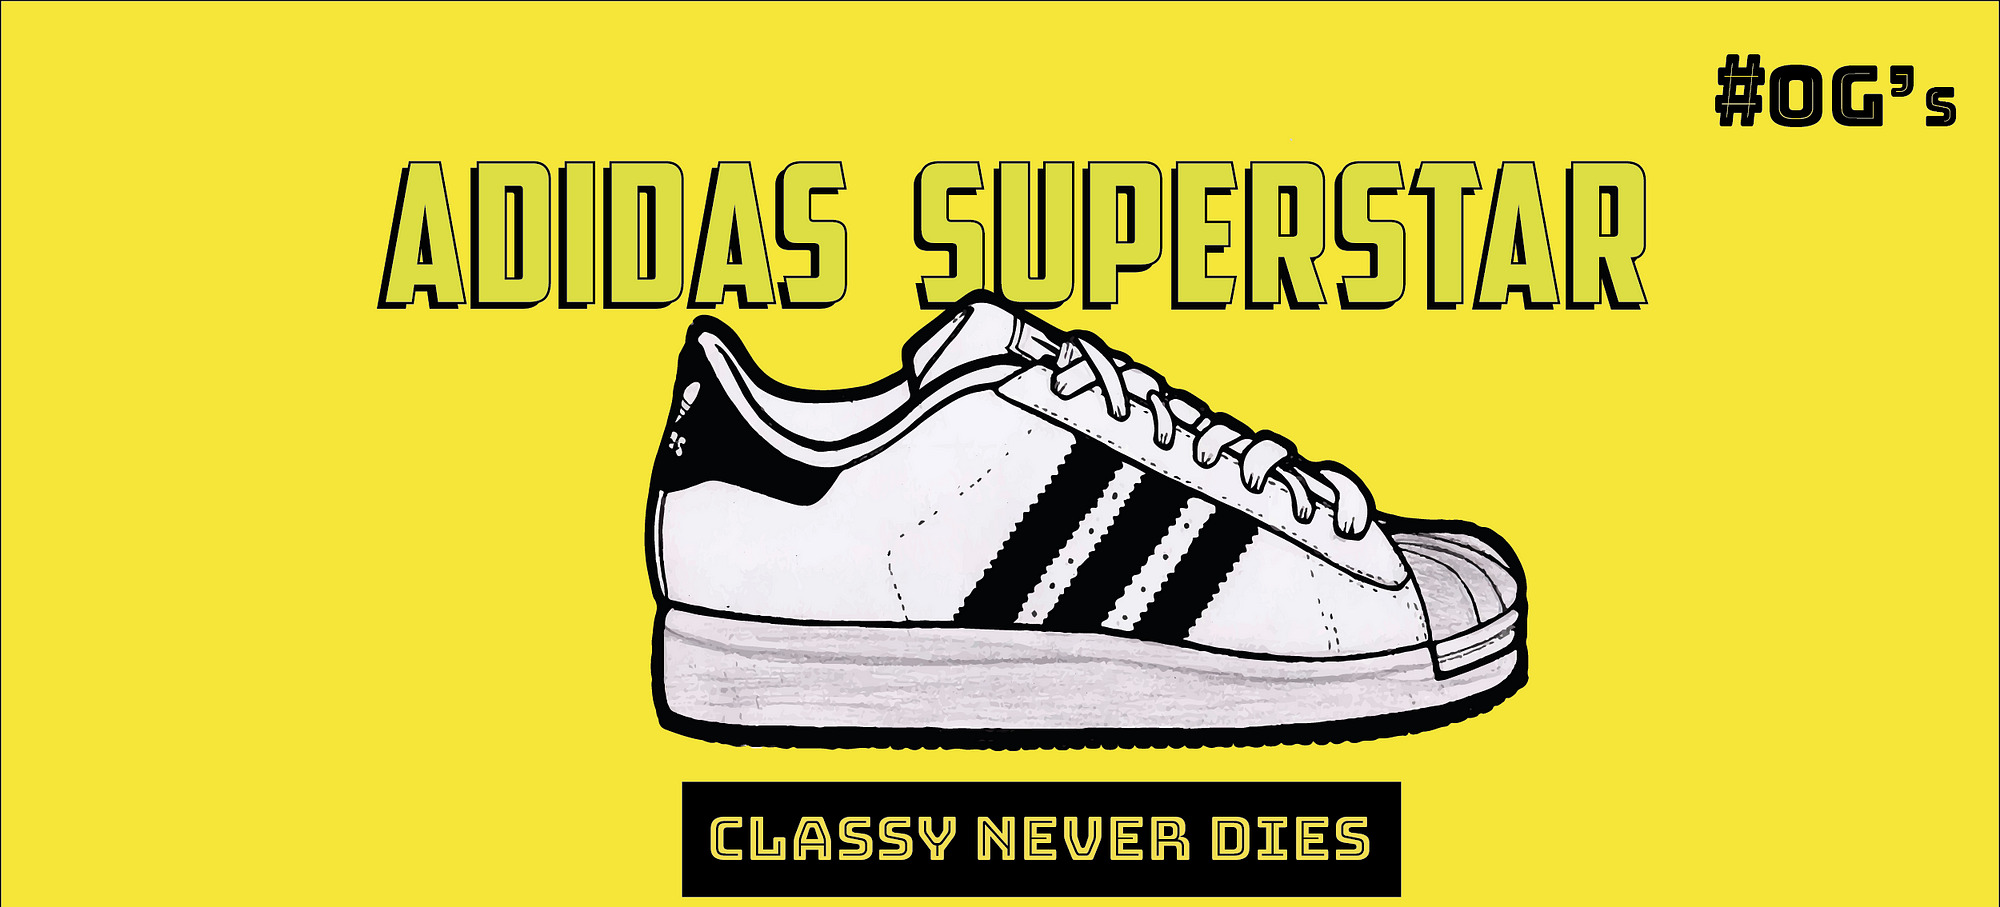 ADIDAS SUPERSTAR. Classy Never Dies | by Celuream | Medium